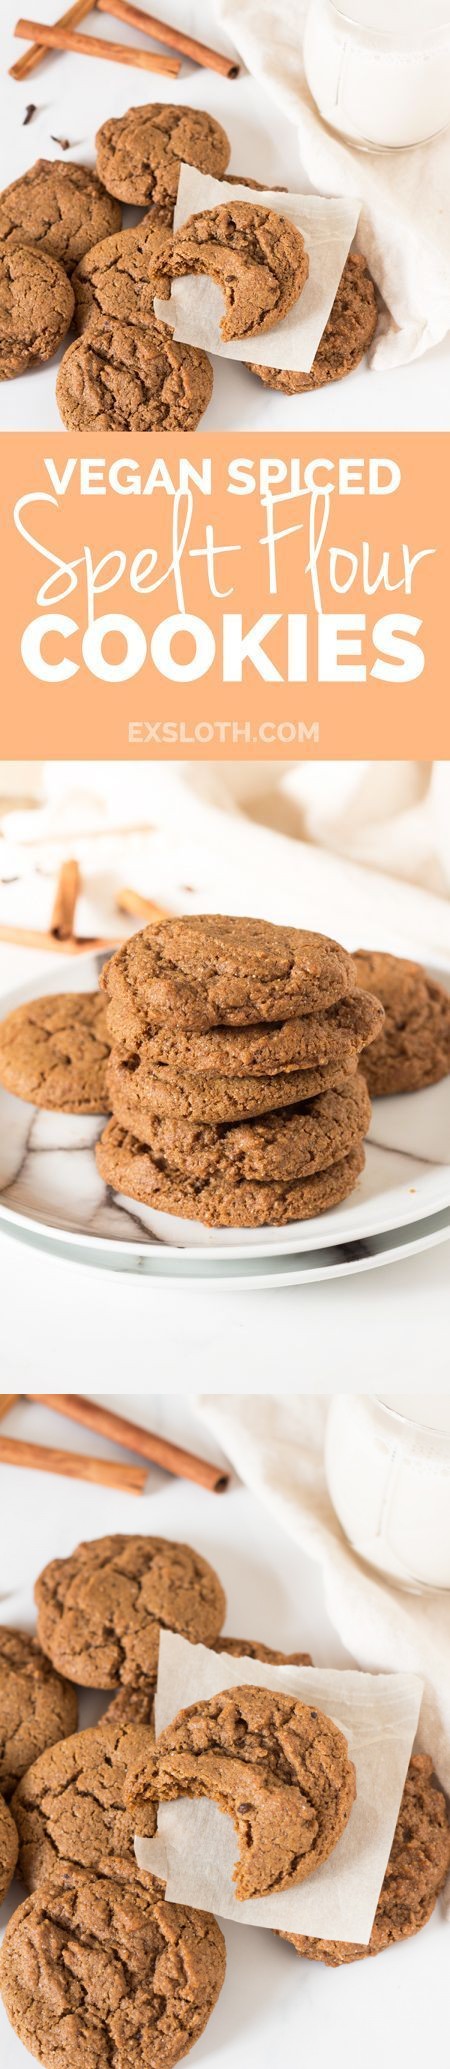 Vegan Spiced Spelt Flour Cookies